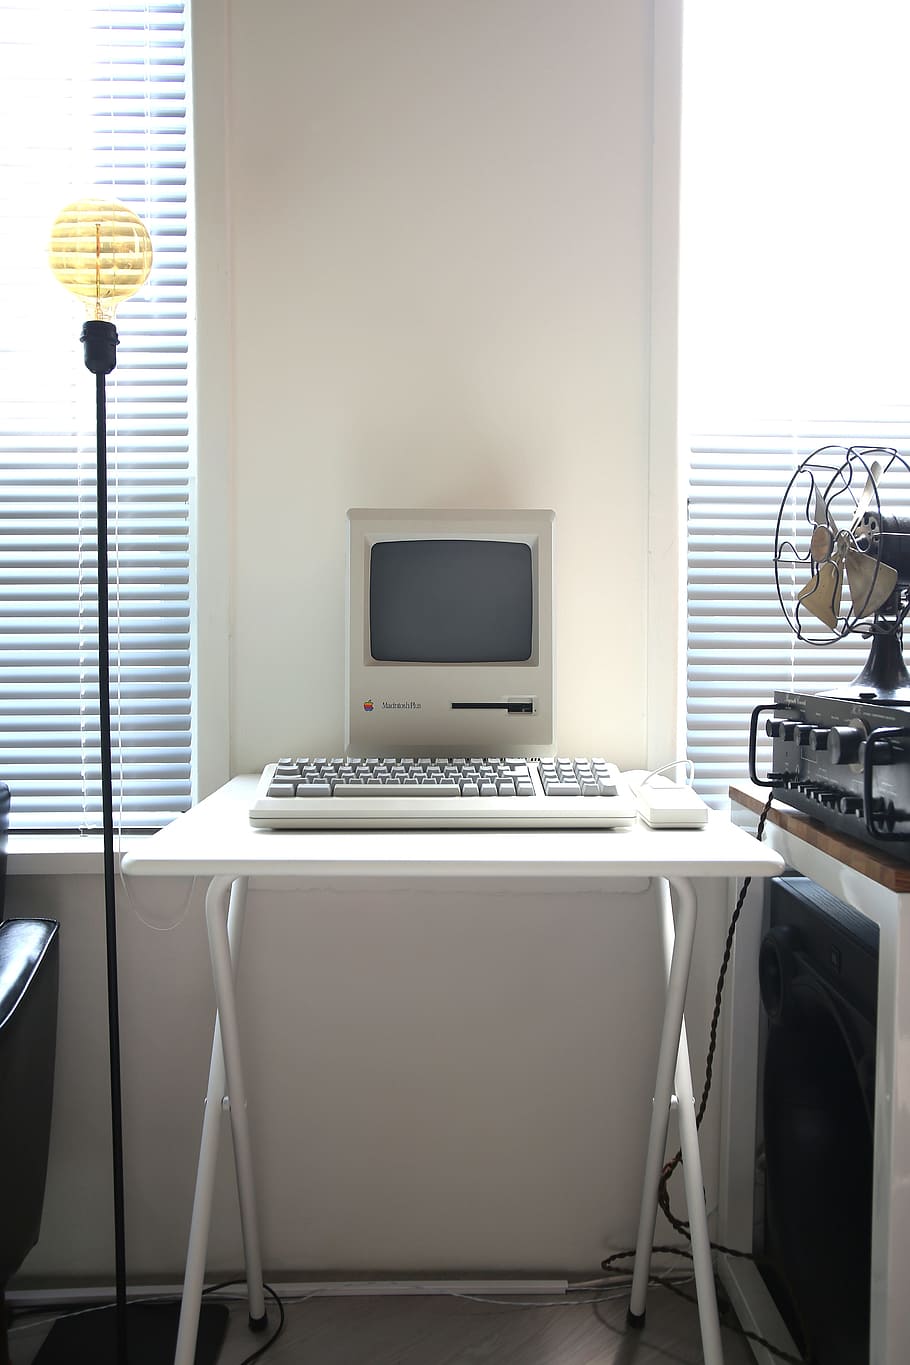 Old Mac, konsyap, oldeumaek, fotos interiores, computador, mesa, escritório, dentro de casa, computador Monitor, tecnologia